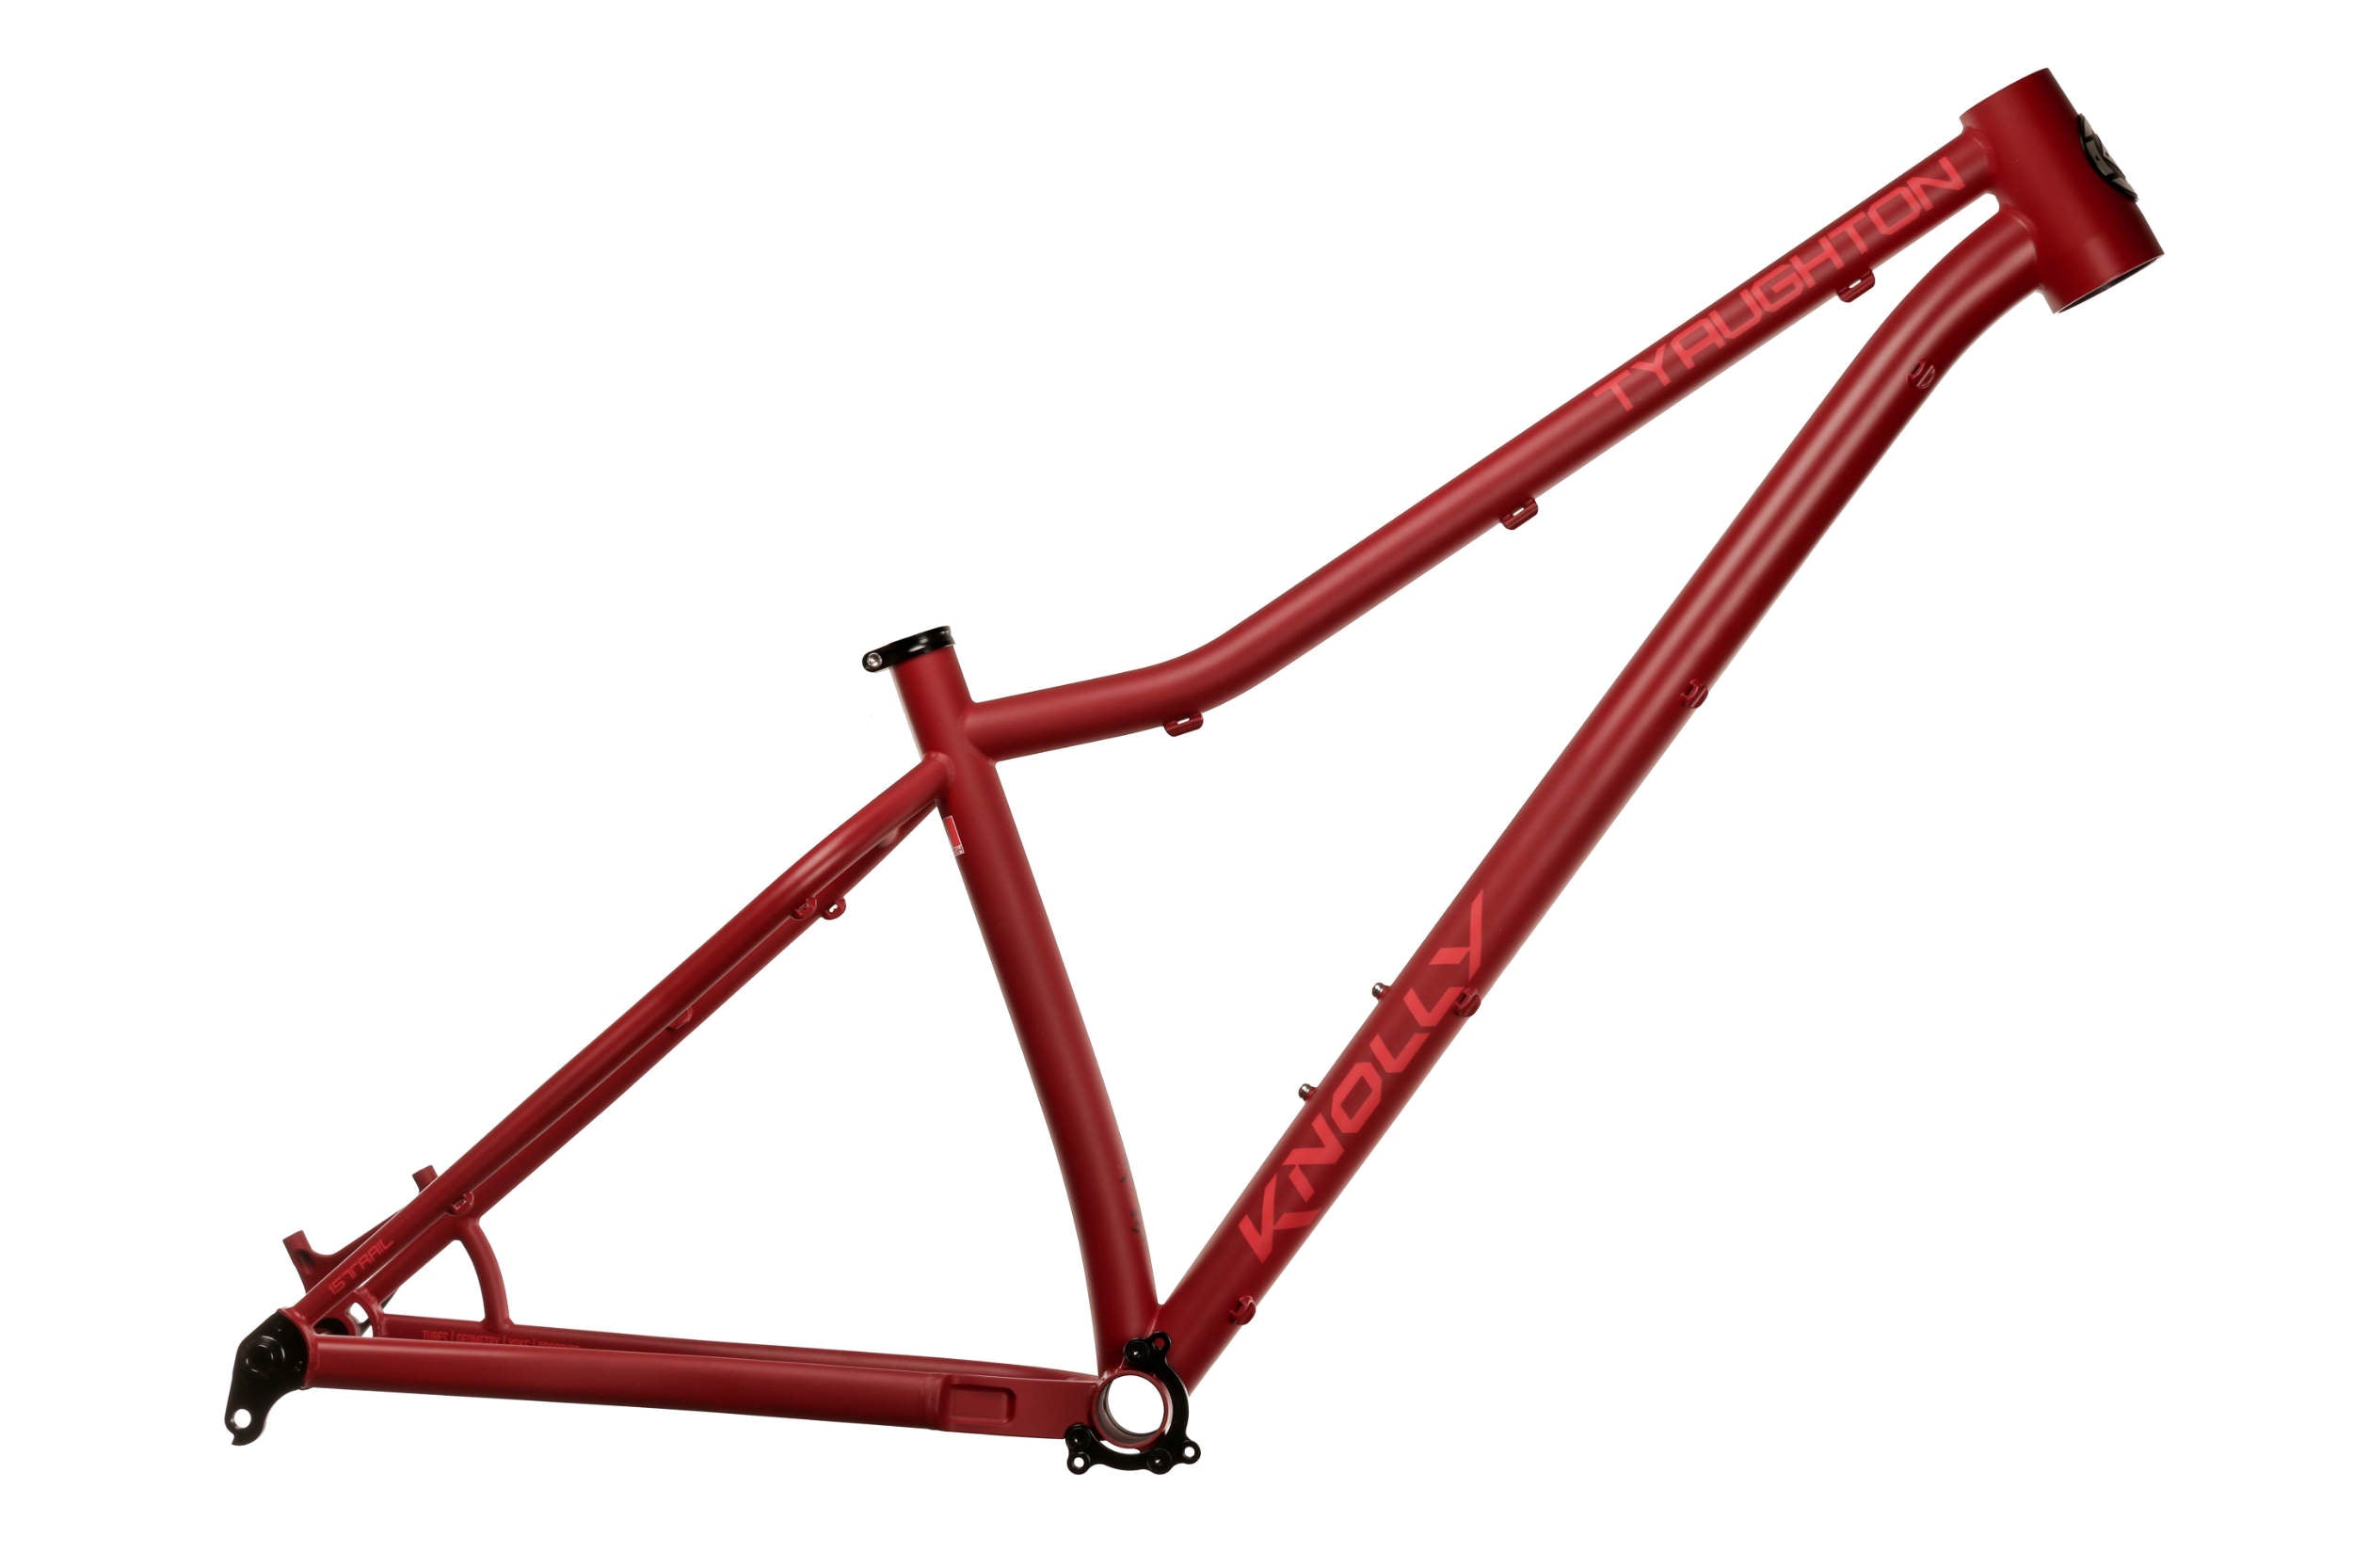 Knolly Tyaughton Steel hardtail mountain bike frame